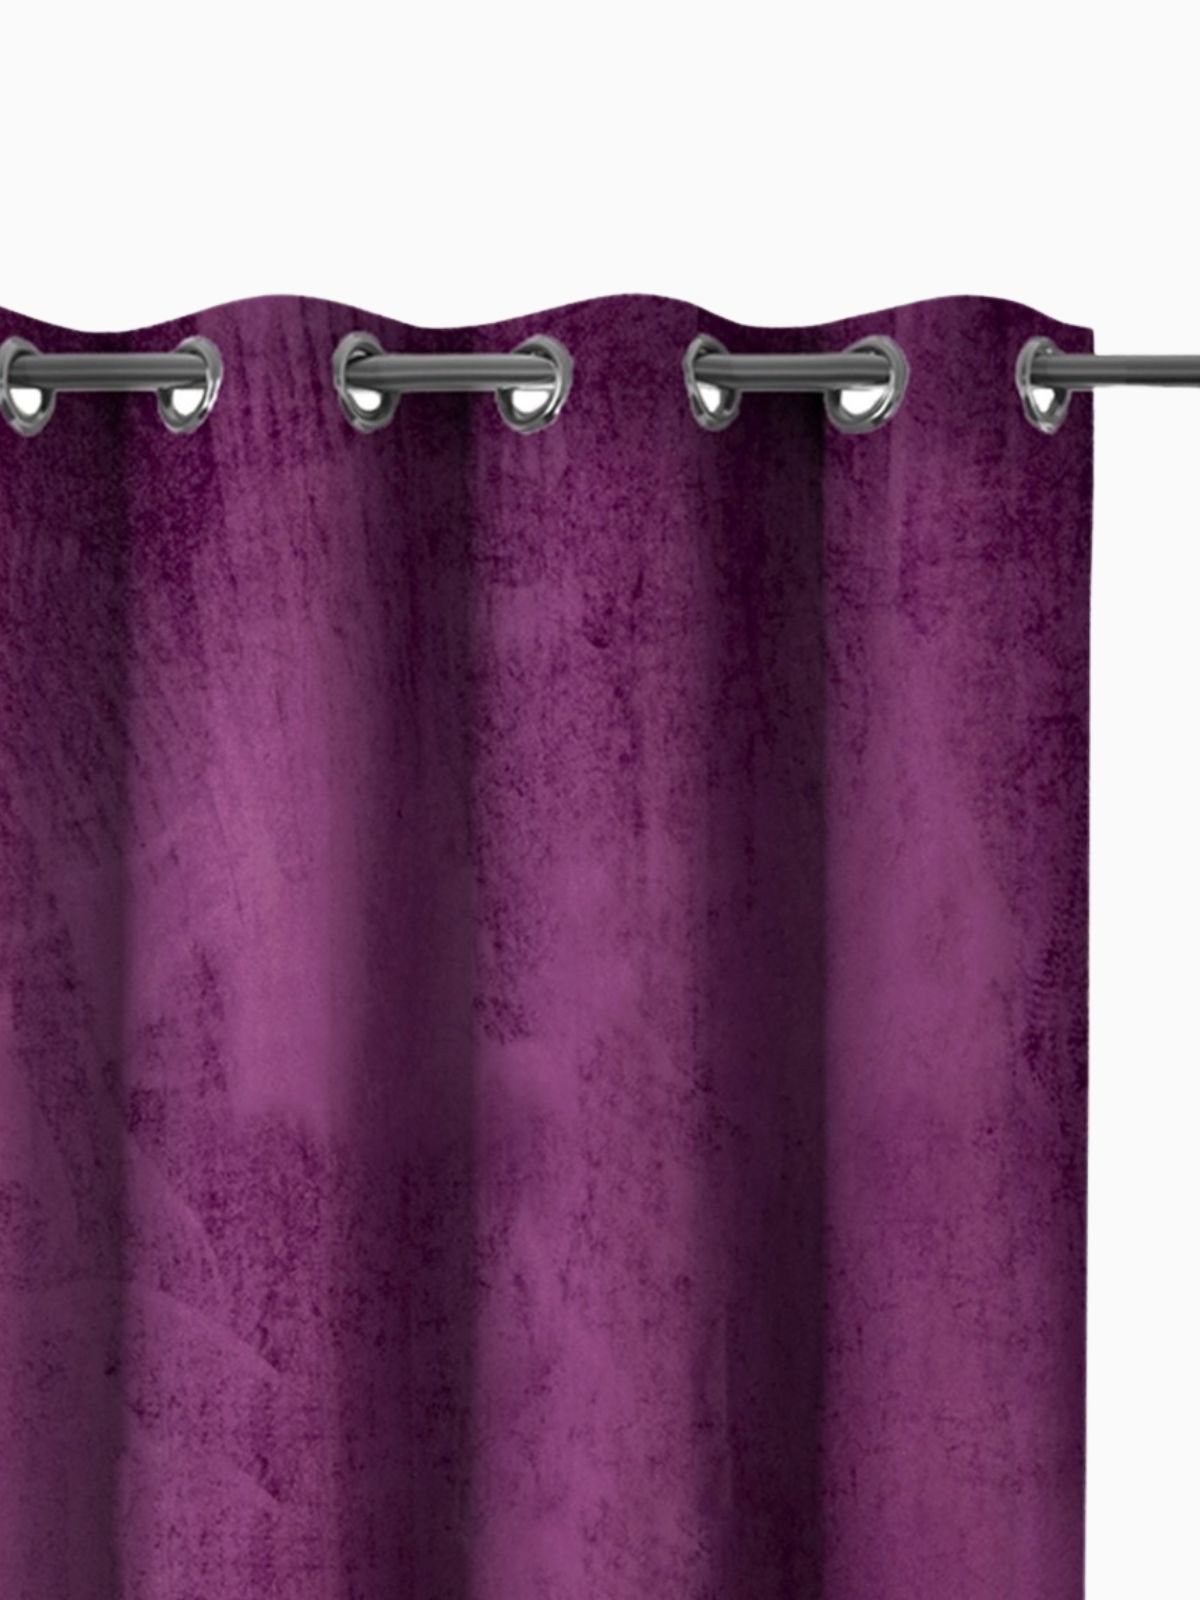 Tenda Velvet in colore viola, effetto velluto 140x245 cm.-1